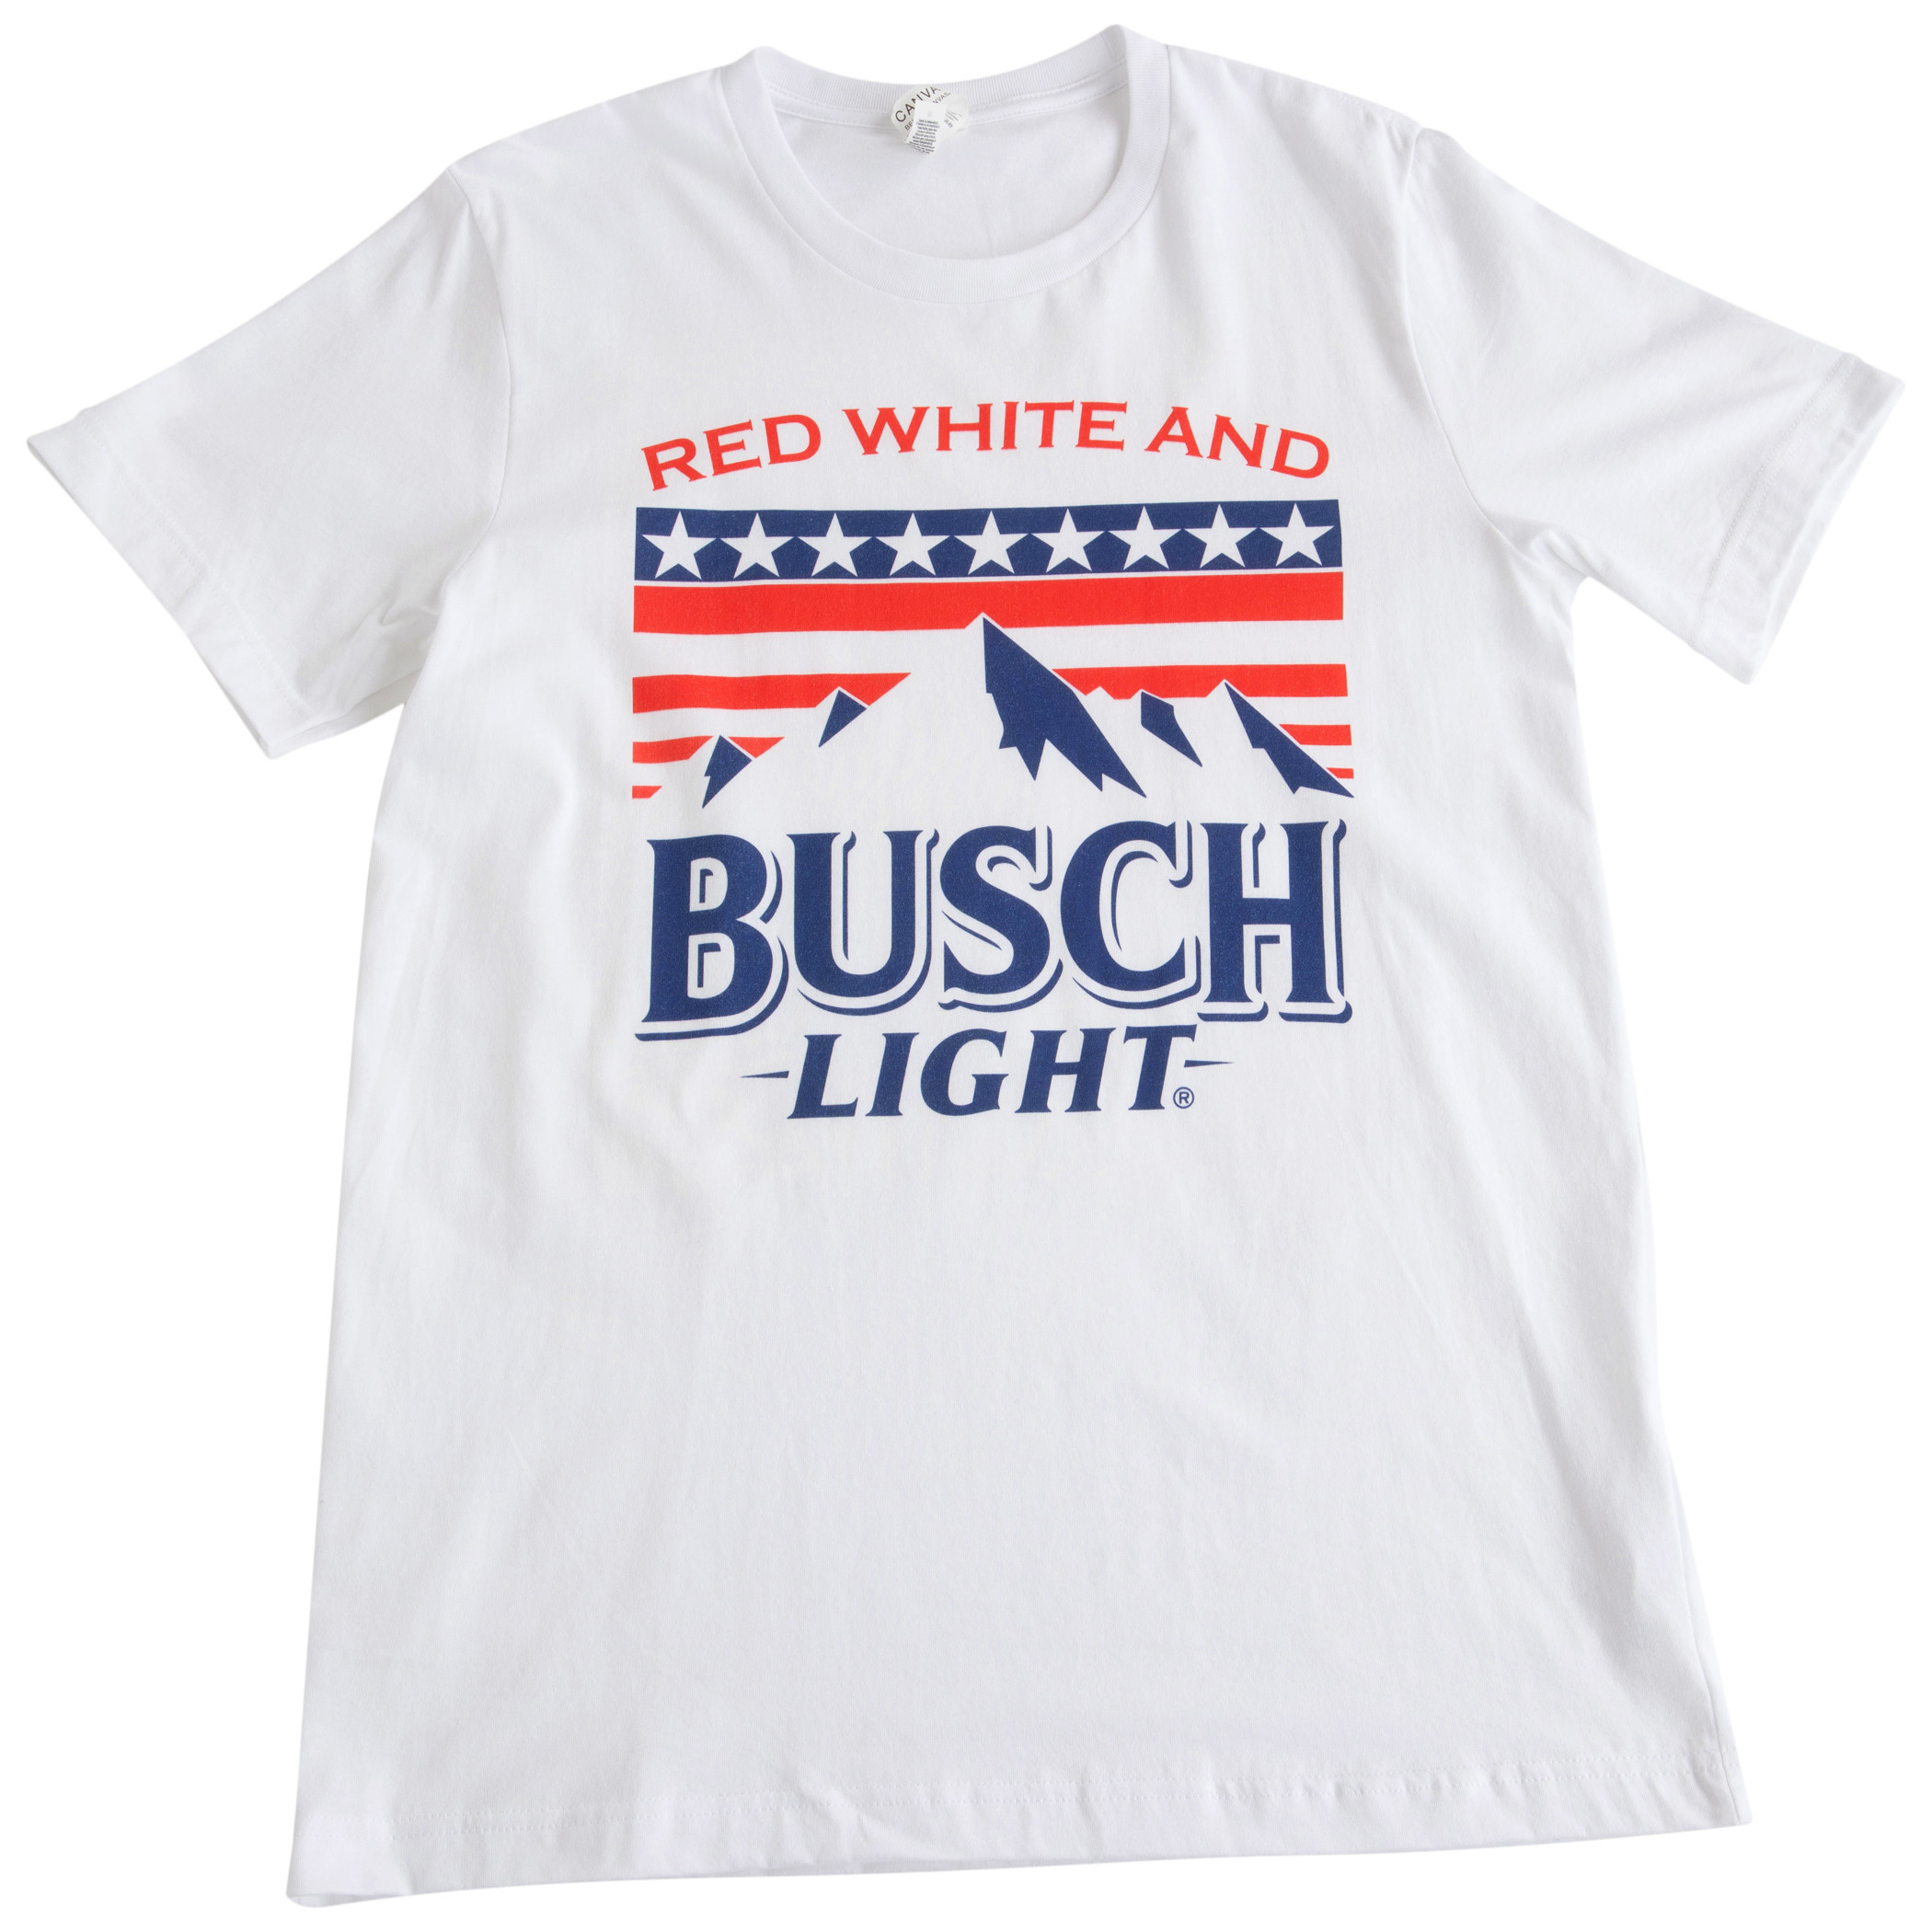 Busch Light Red White and Busch Light Mountains White T-Shirt